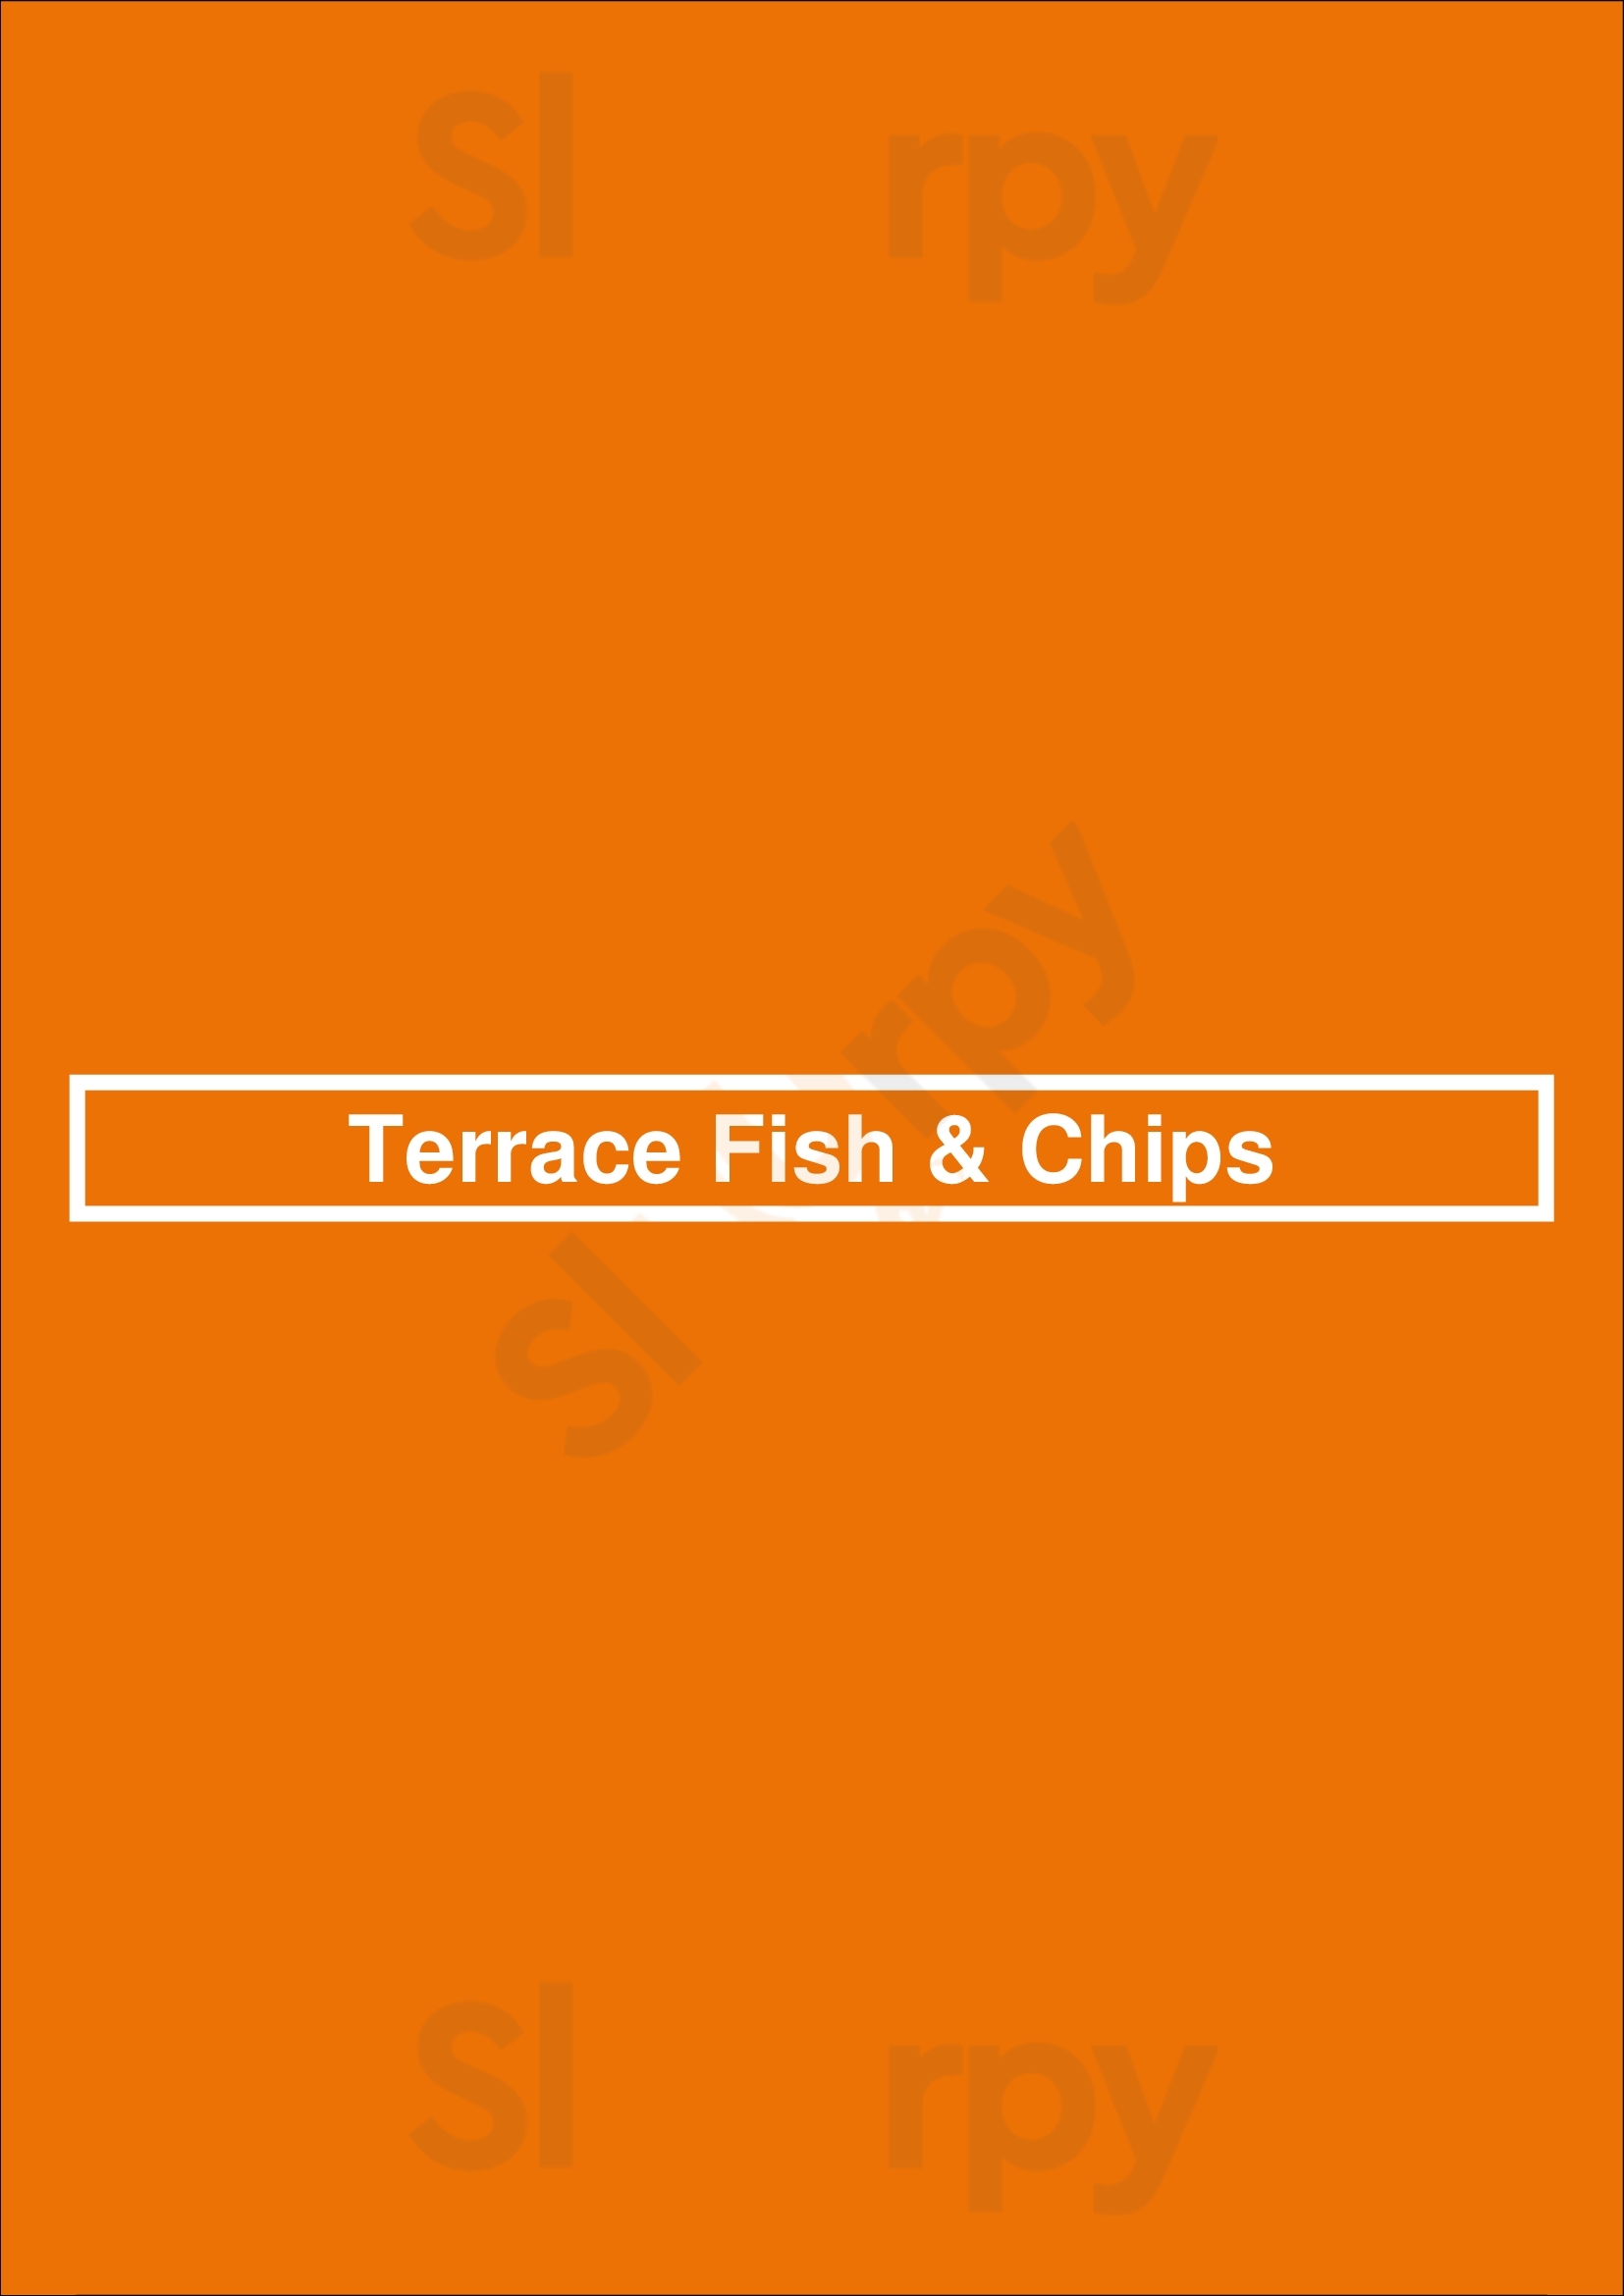 Terrace Fish & Chips New York City Menu - 1